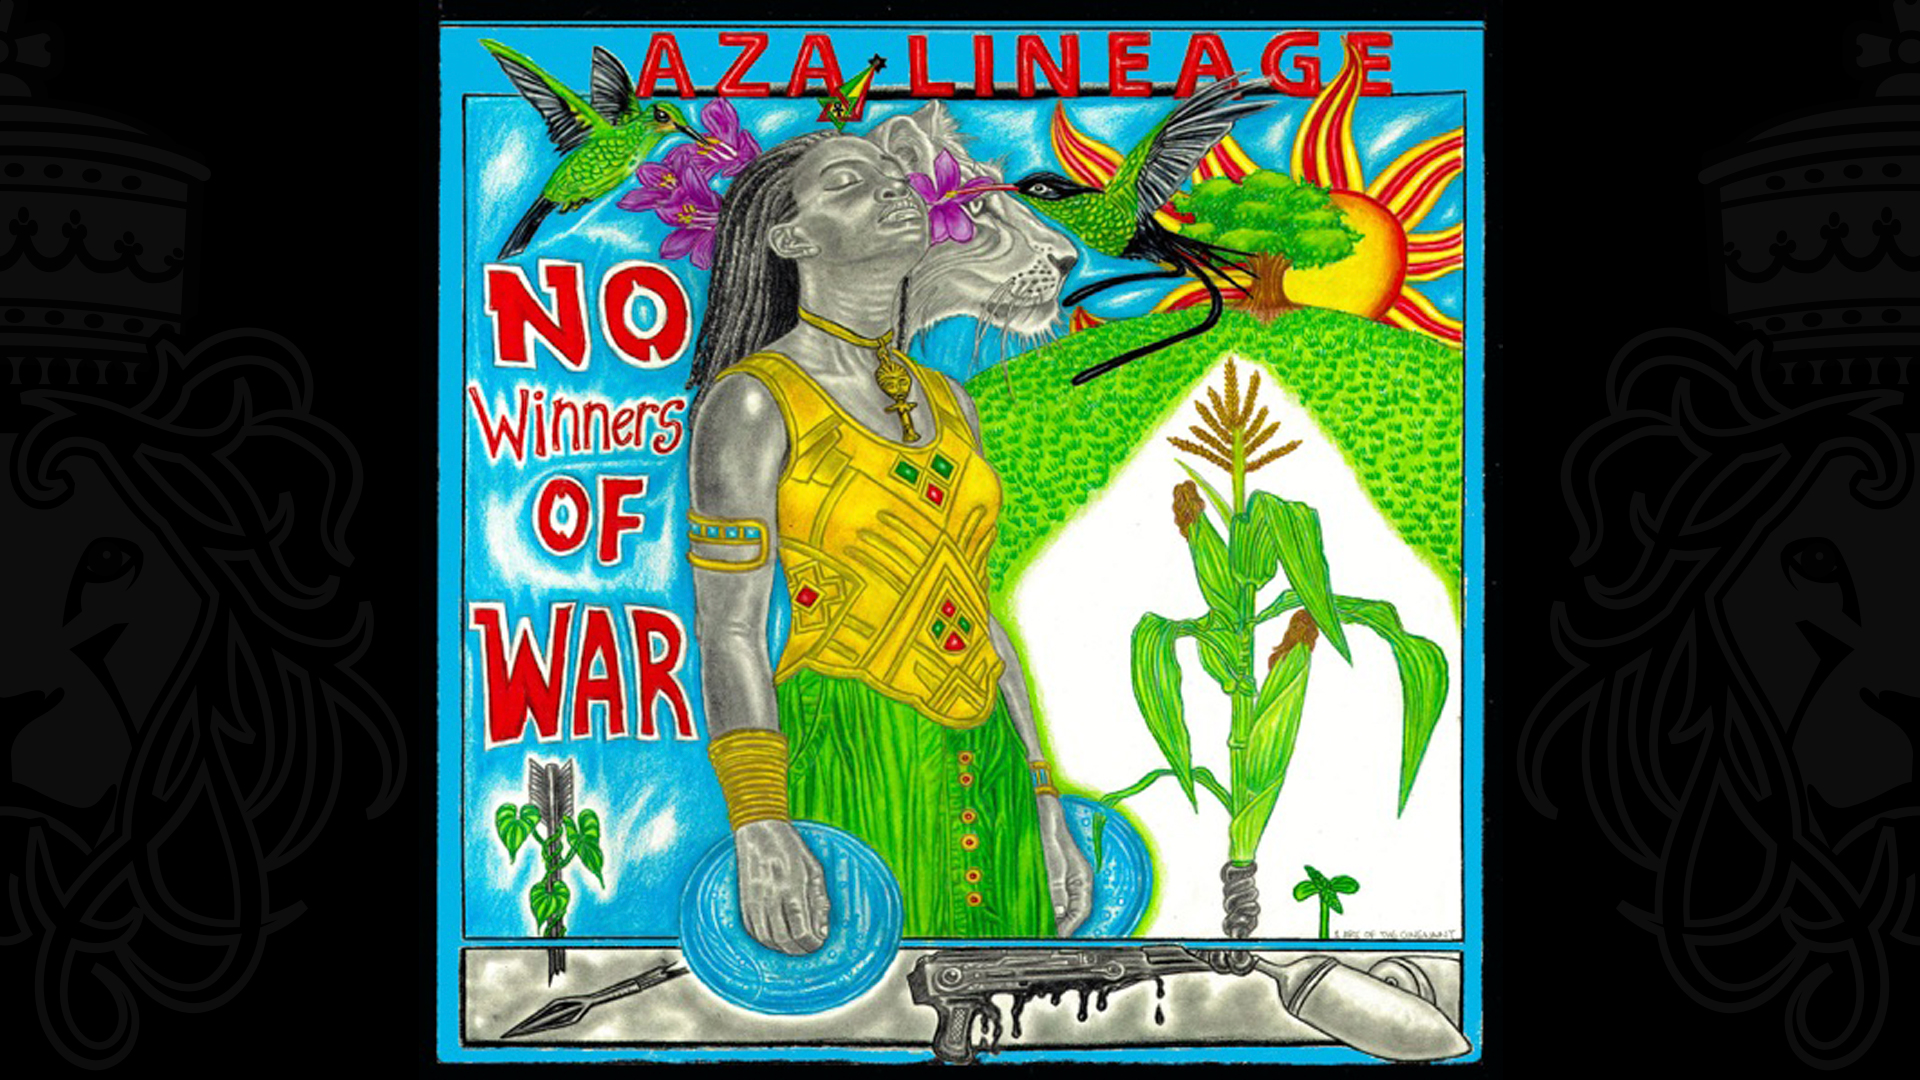 Aza Lineage - No Winners of War (Be Forgiving)